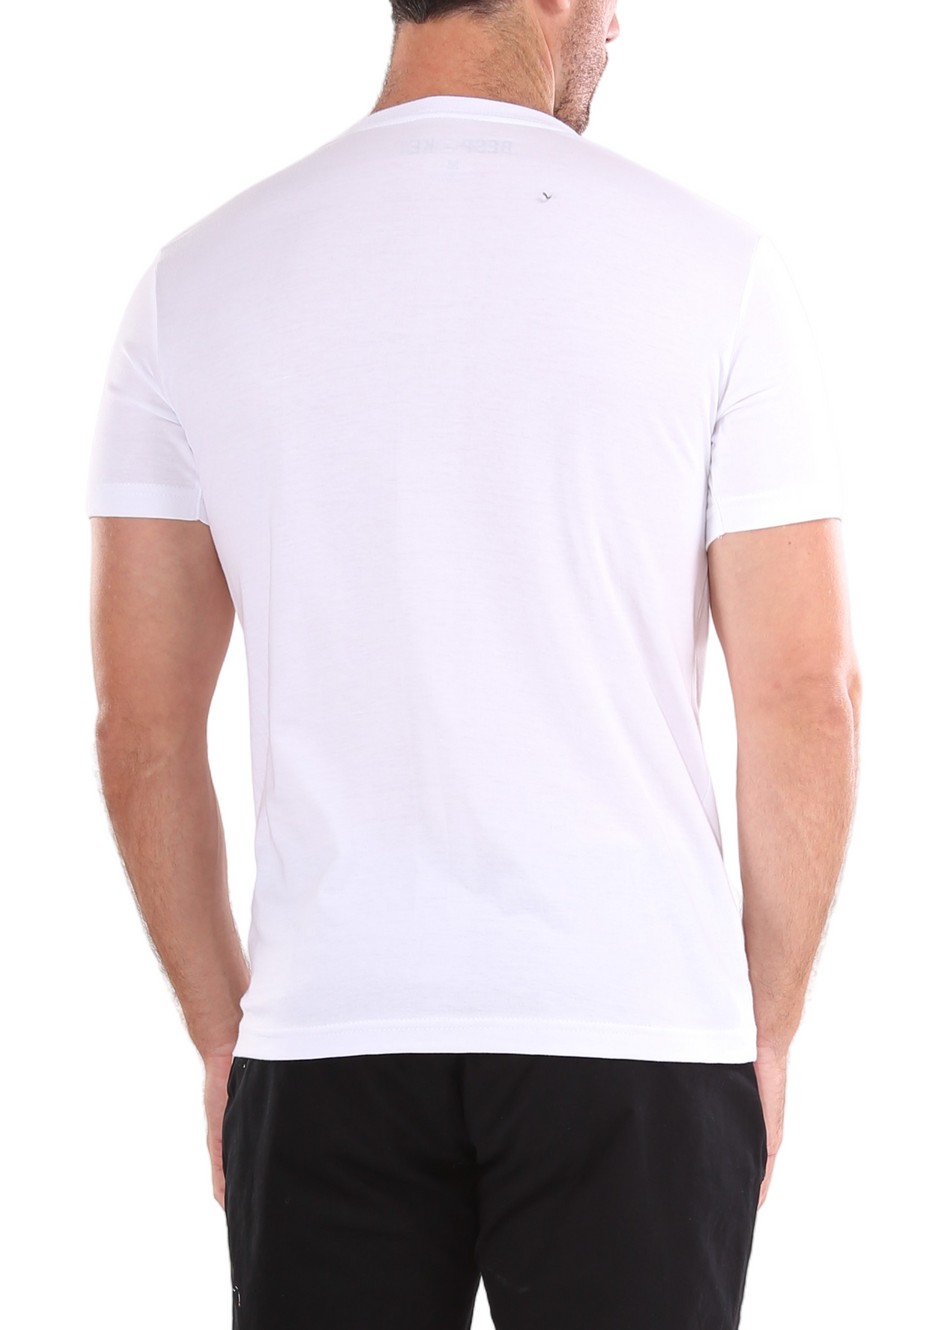 161843 - Men's White Cotton Short Sleeve T-Shirt